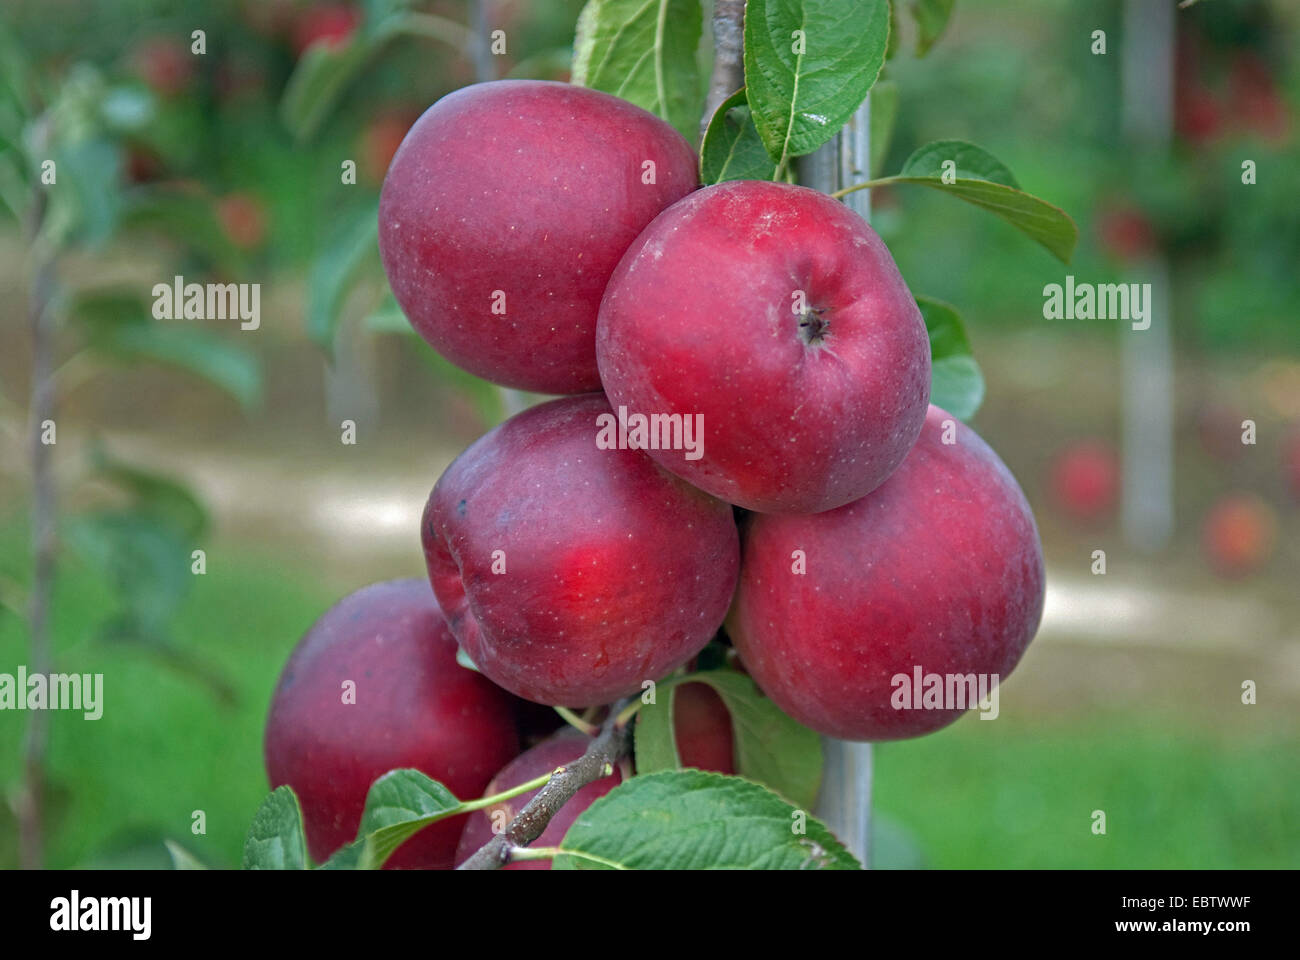 apple tree (Malus domestica 'Enterprise', Malus domestica Enterprise), cultivar Enterprise, apples on a tree Stock Photo